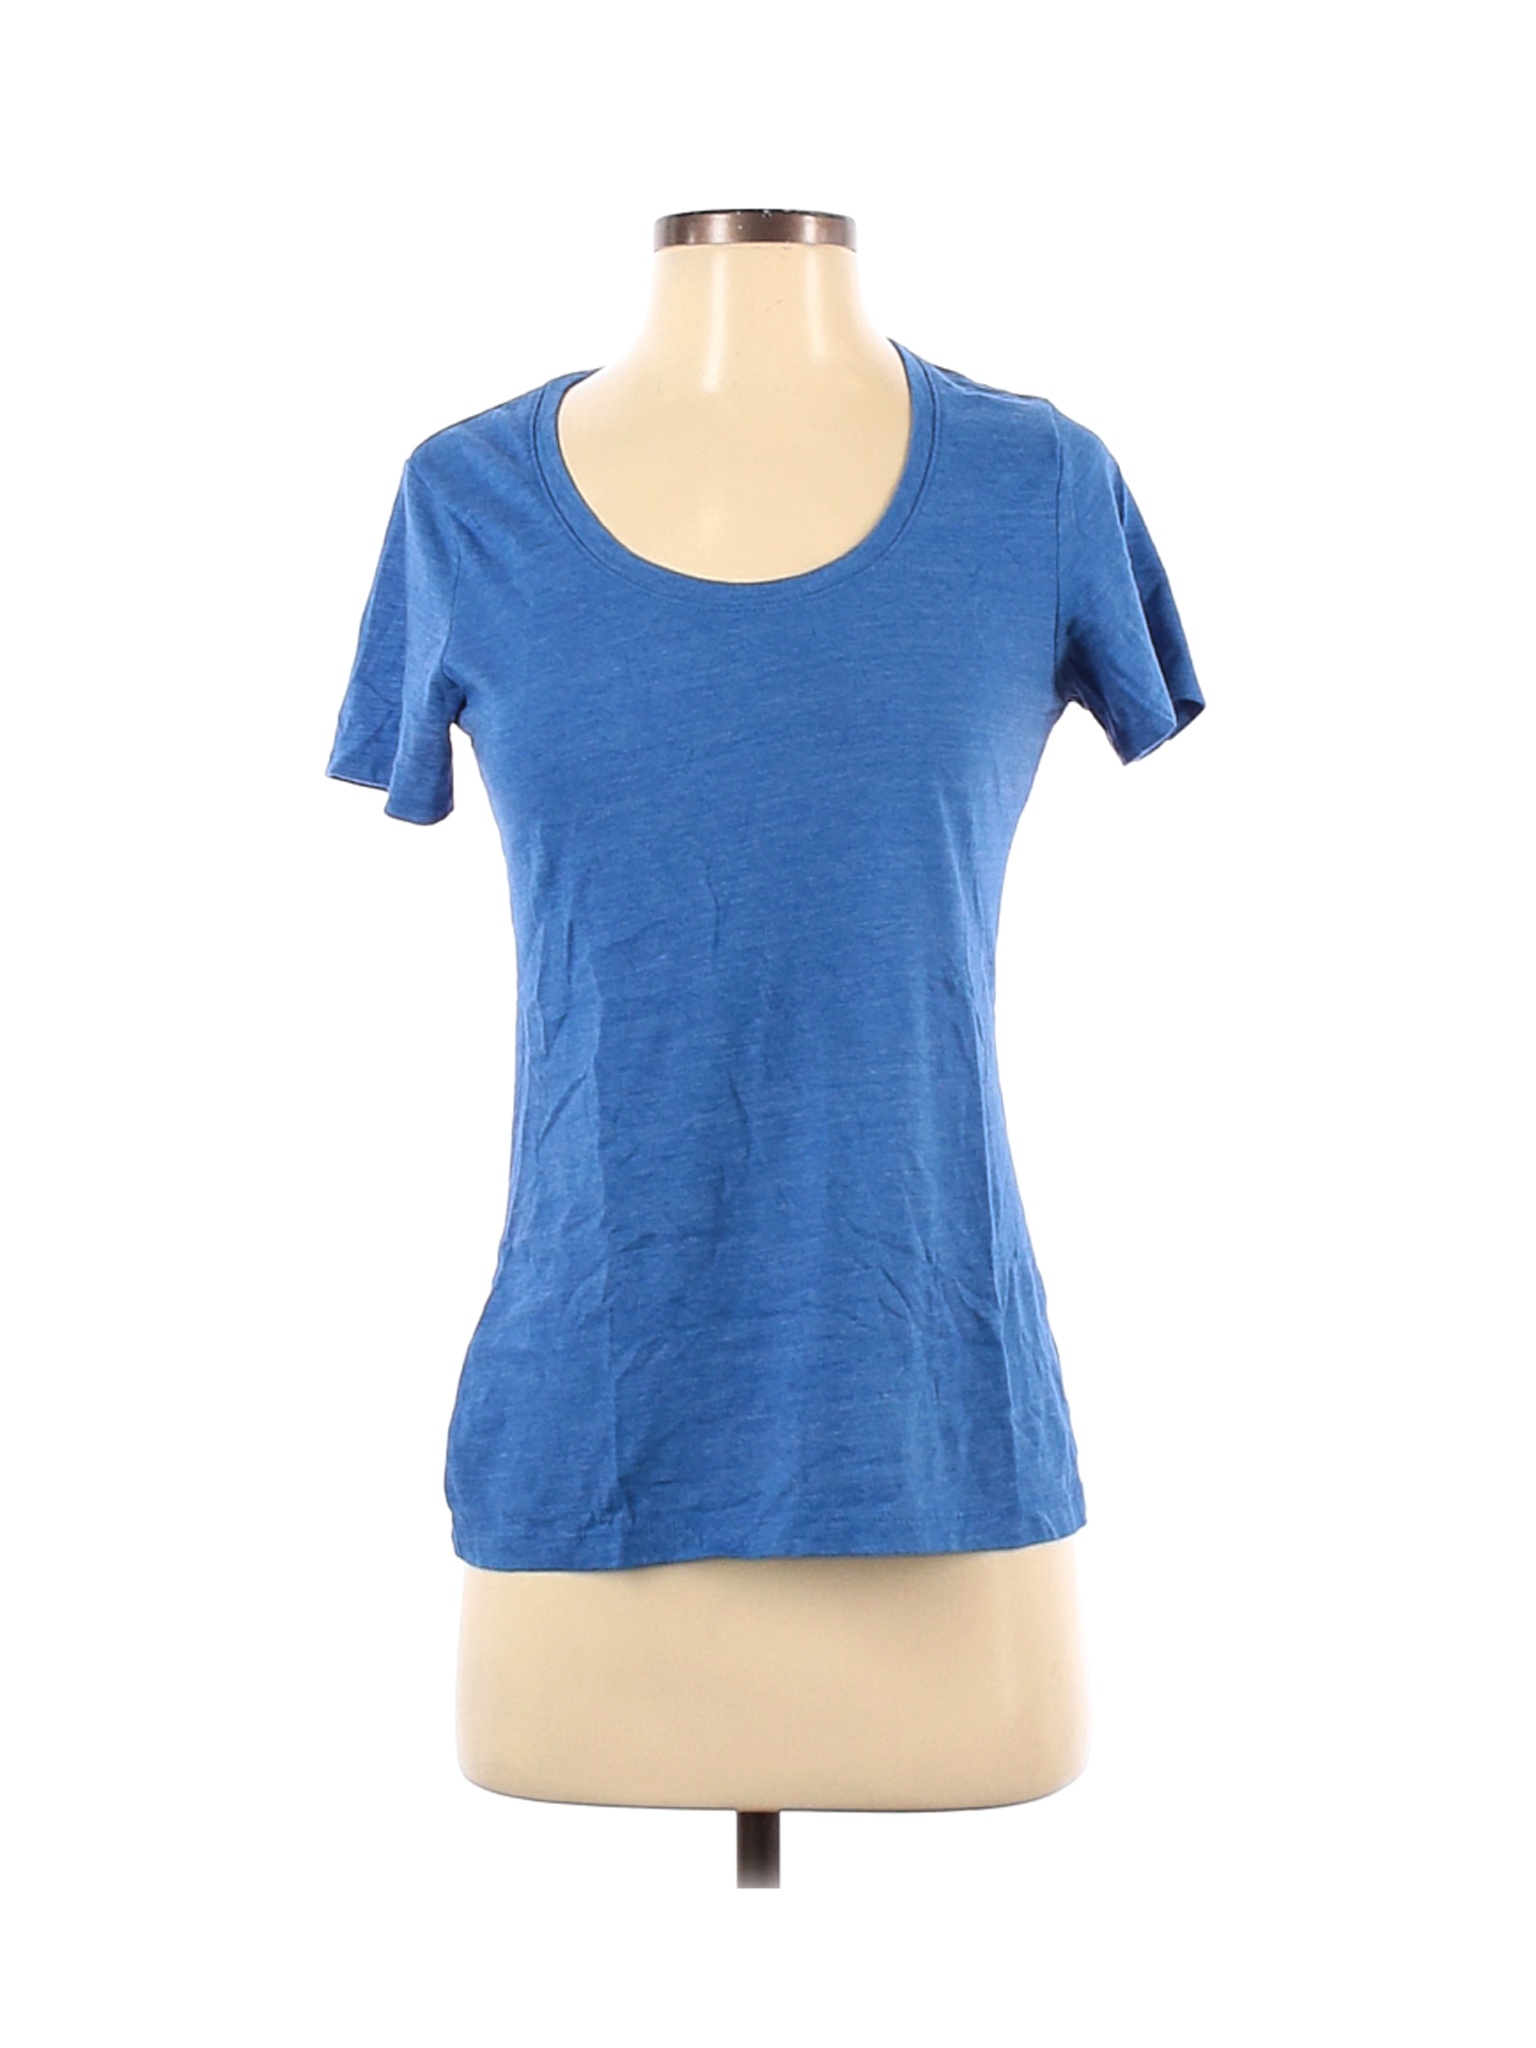 Gear for Sports Women Blue Short Sleeve T-Shirt S | eBay